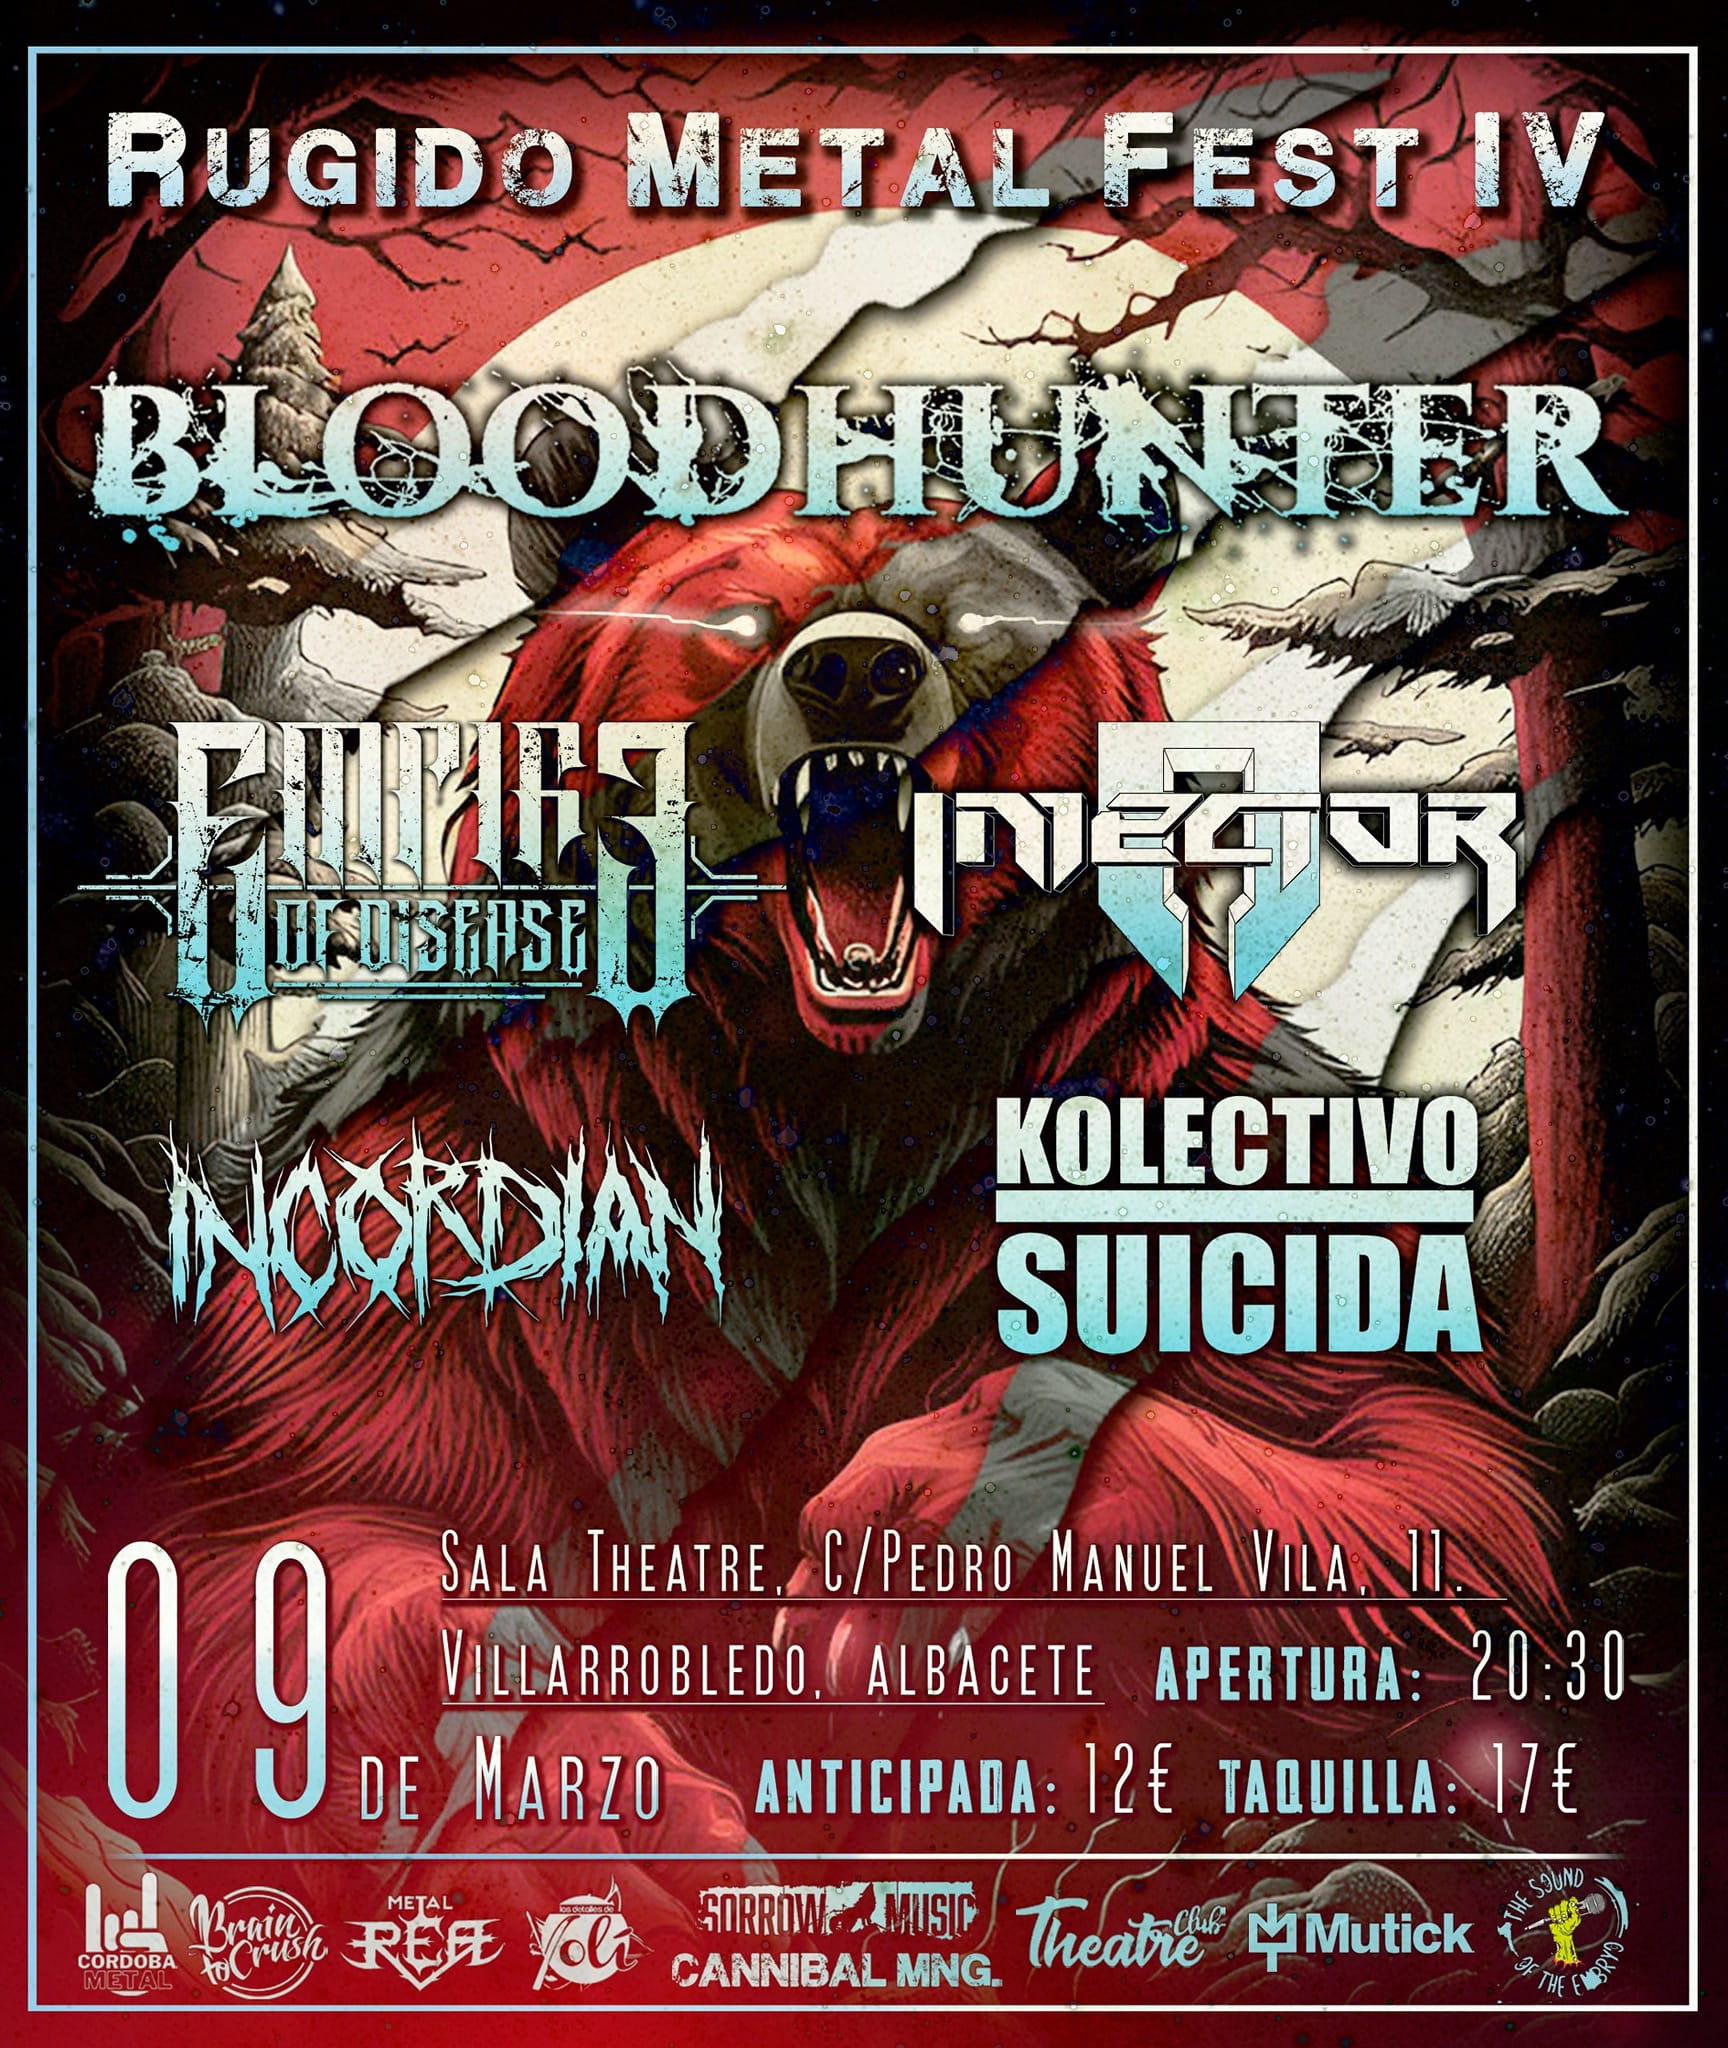 Rugido Metal Fest IV en Albacete  - Mutick